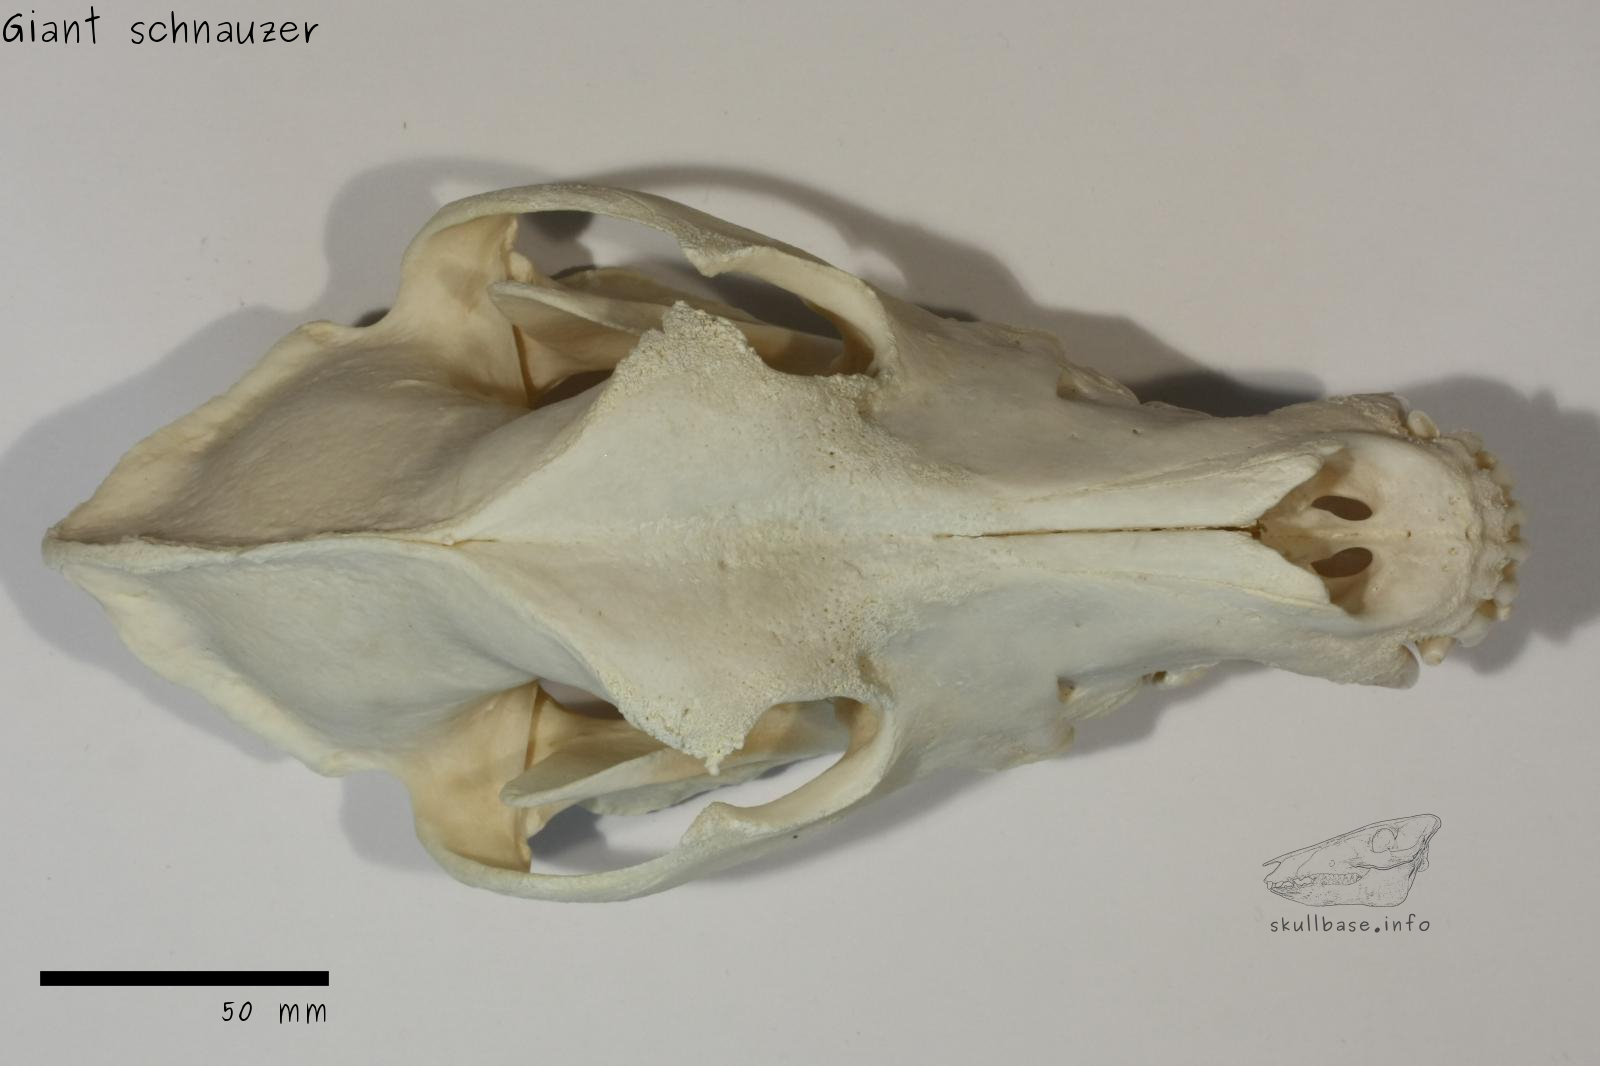 Giant schnauzer (Canis lupus familiaris) skull dorsal view